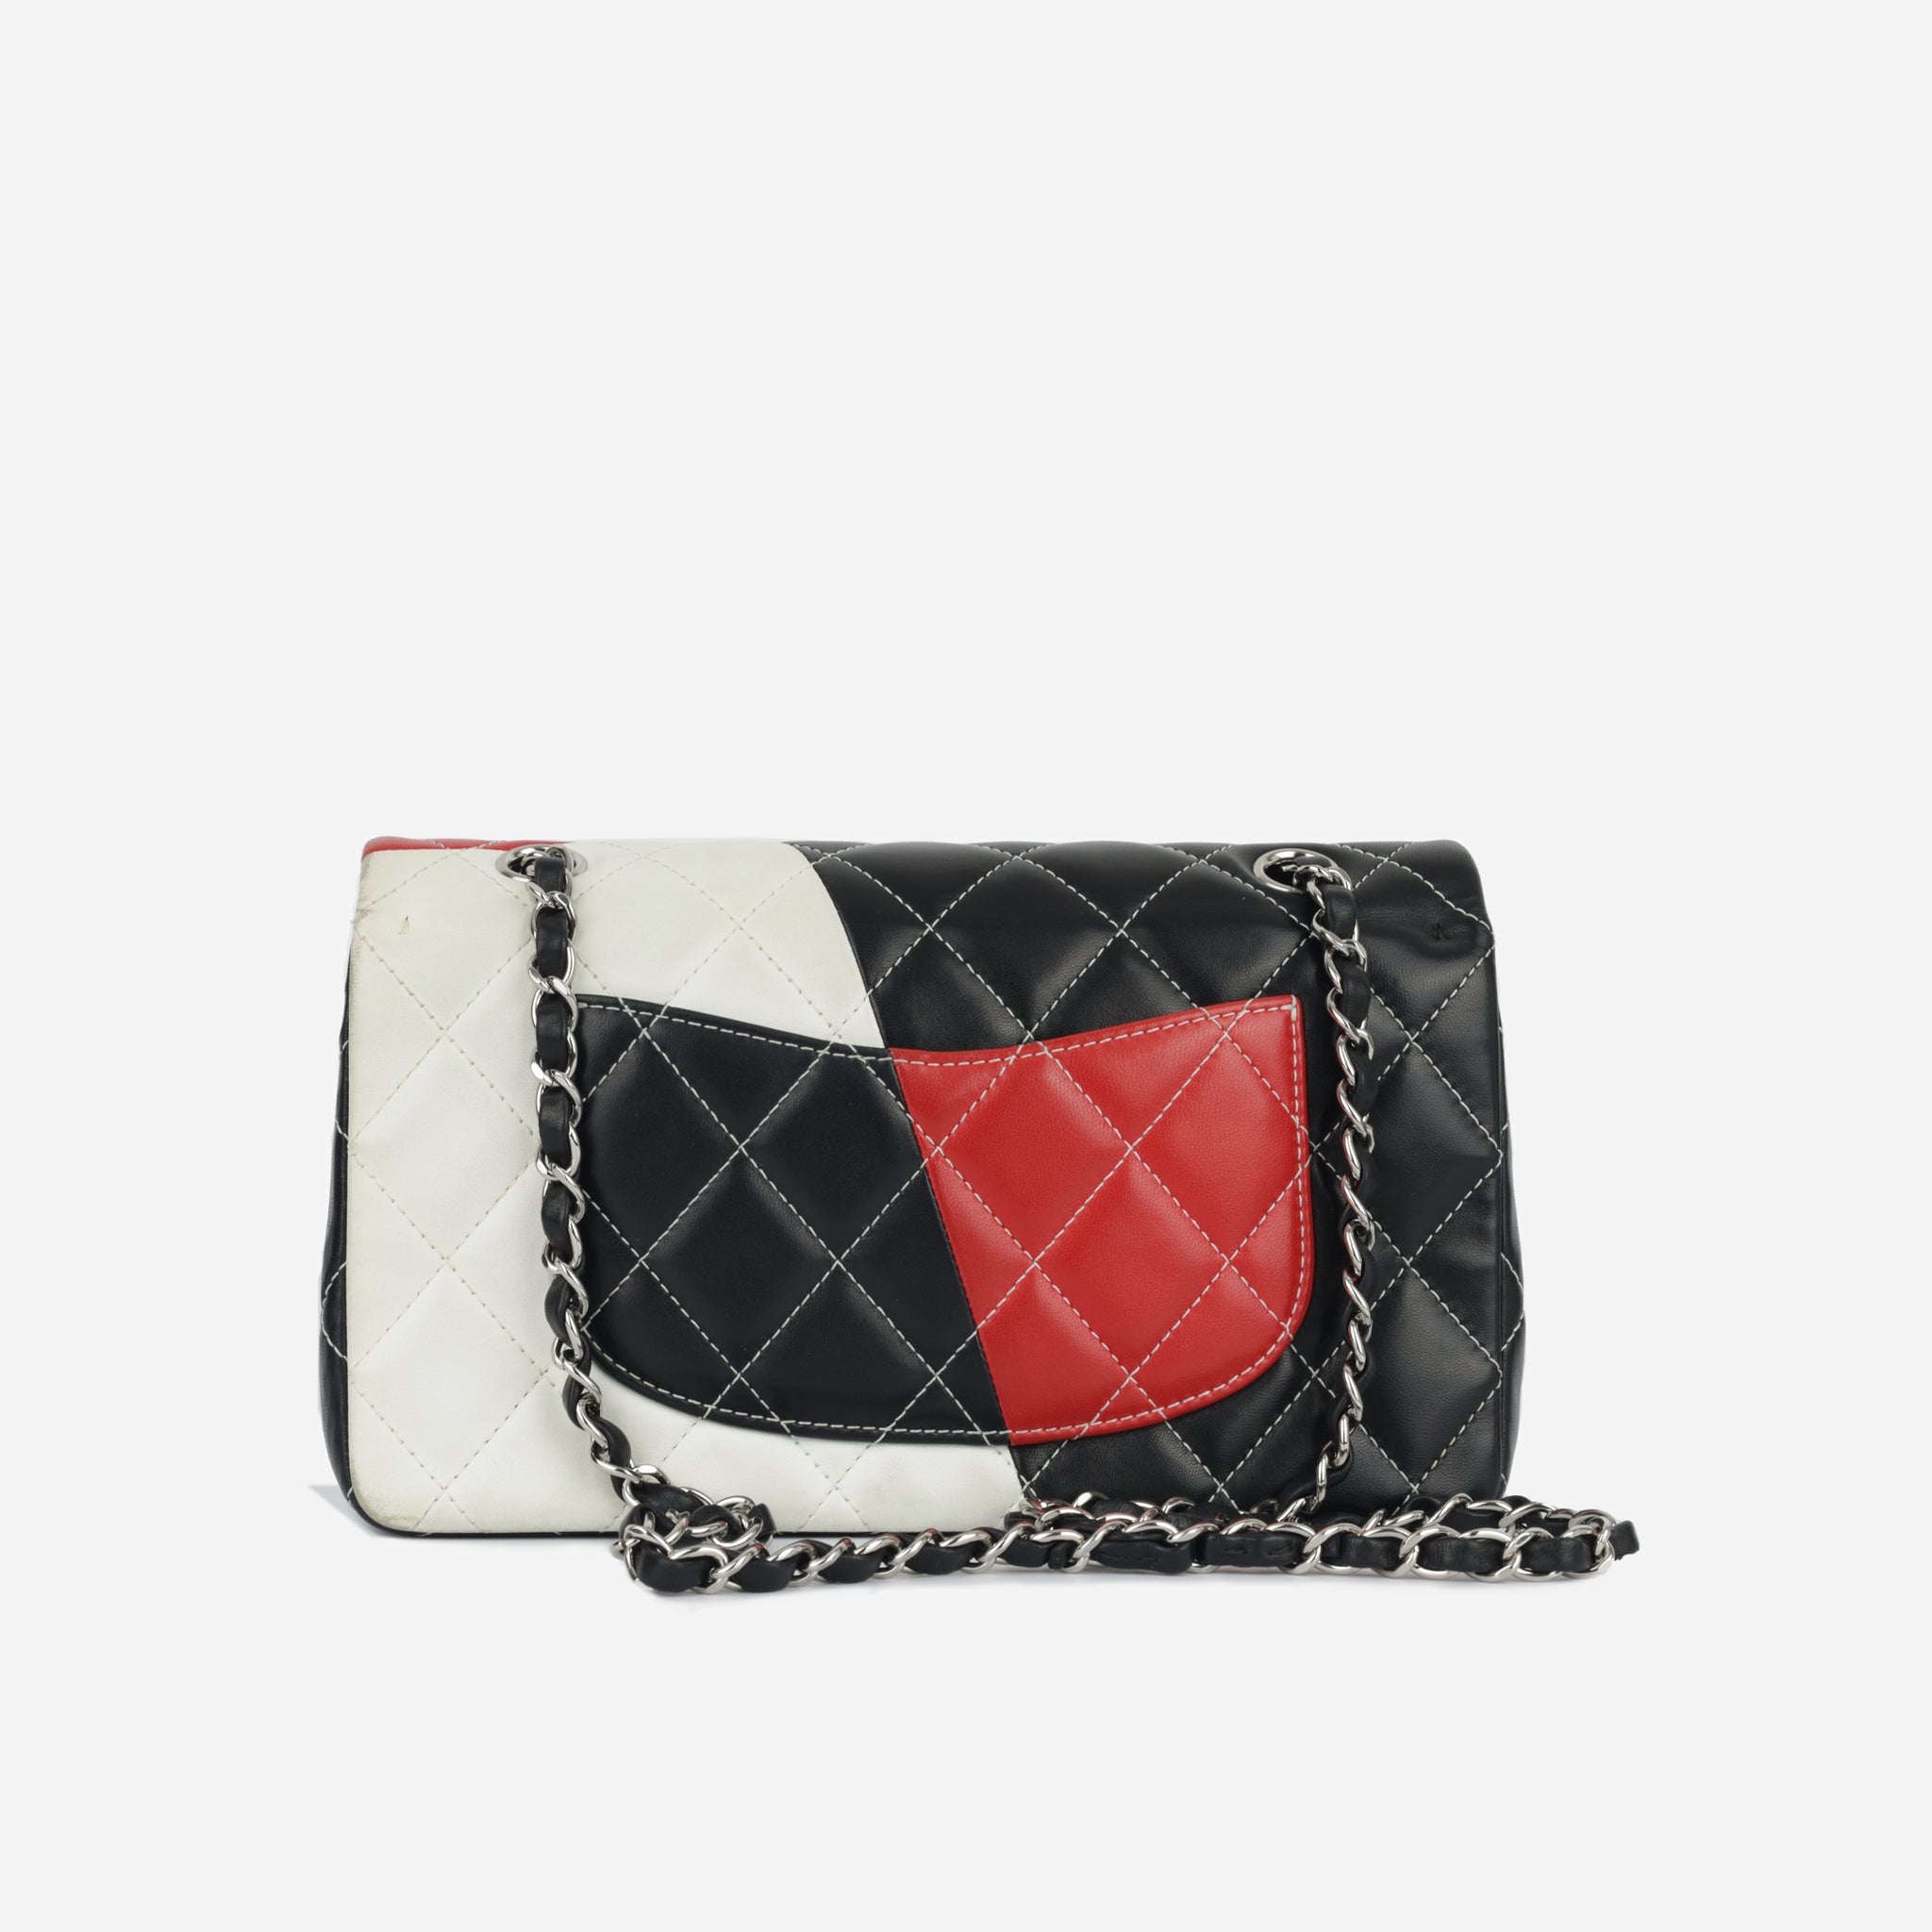 Chanel - Colorblock Flap Bag - Medium - Red / White / Black Lambskin - SHW  - 2013